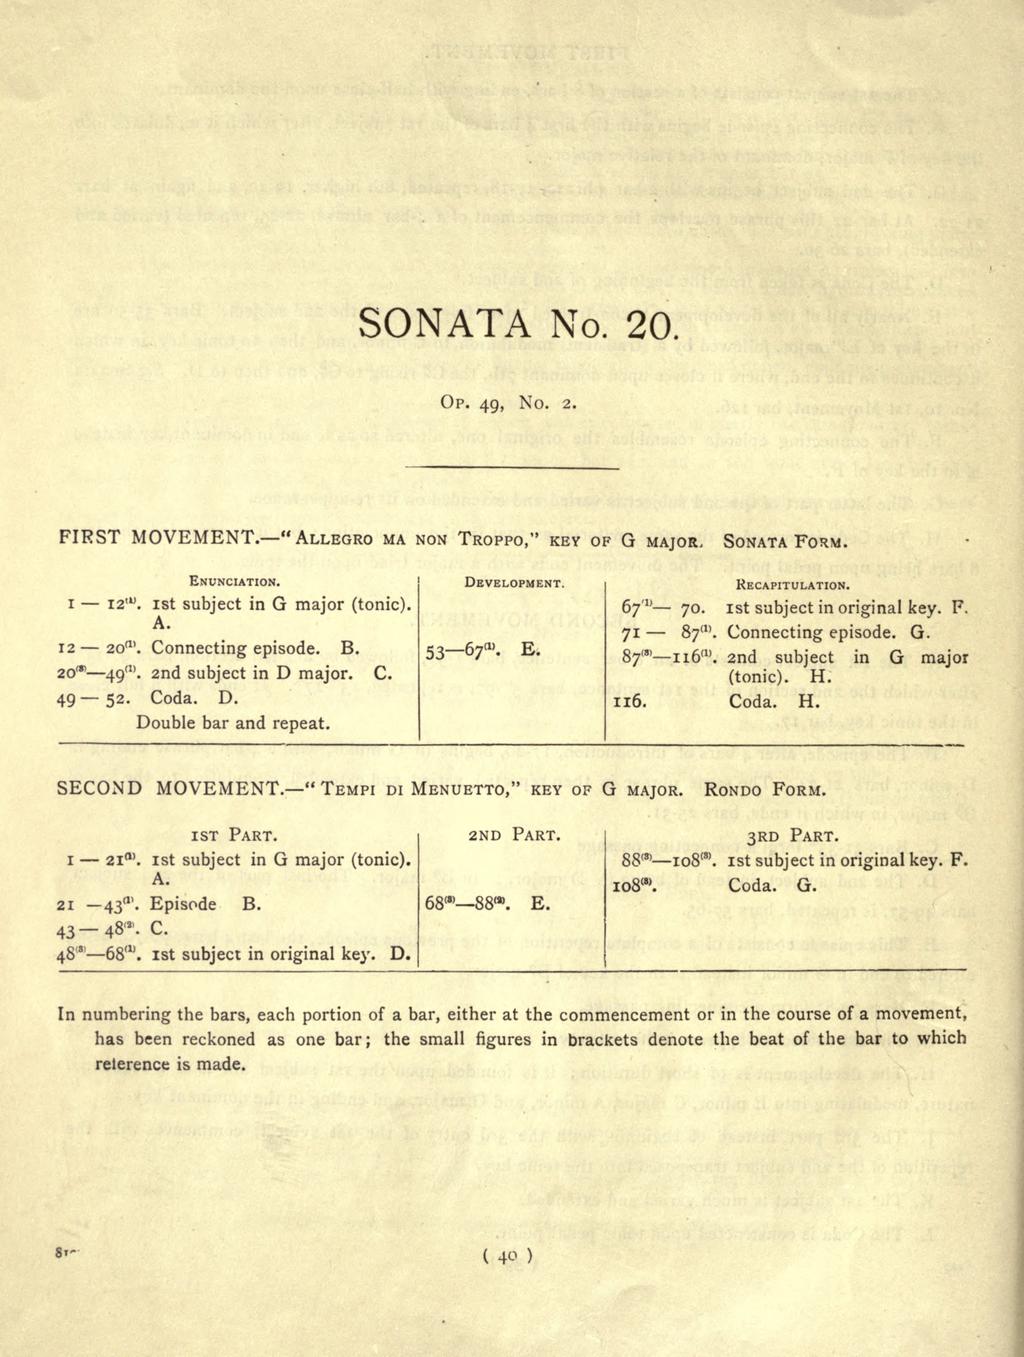 SONATA No. 20. Op. 49, No. 2. FIRST MOVEMENT. "ALLEGRO MA NON TROPPO," KEY OF G MAJOR, SONATA FORM. i 12'". ist subject in G major (tonic). A. 12 20 ni. Connecting episode. B. 1*1 2O 49'".